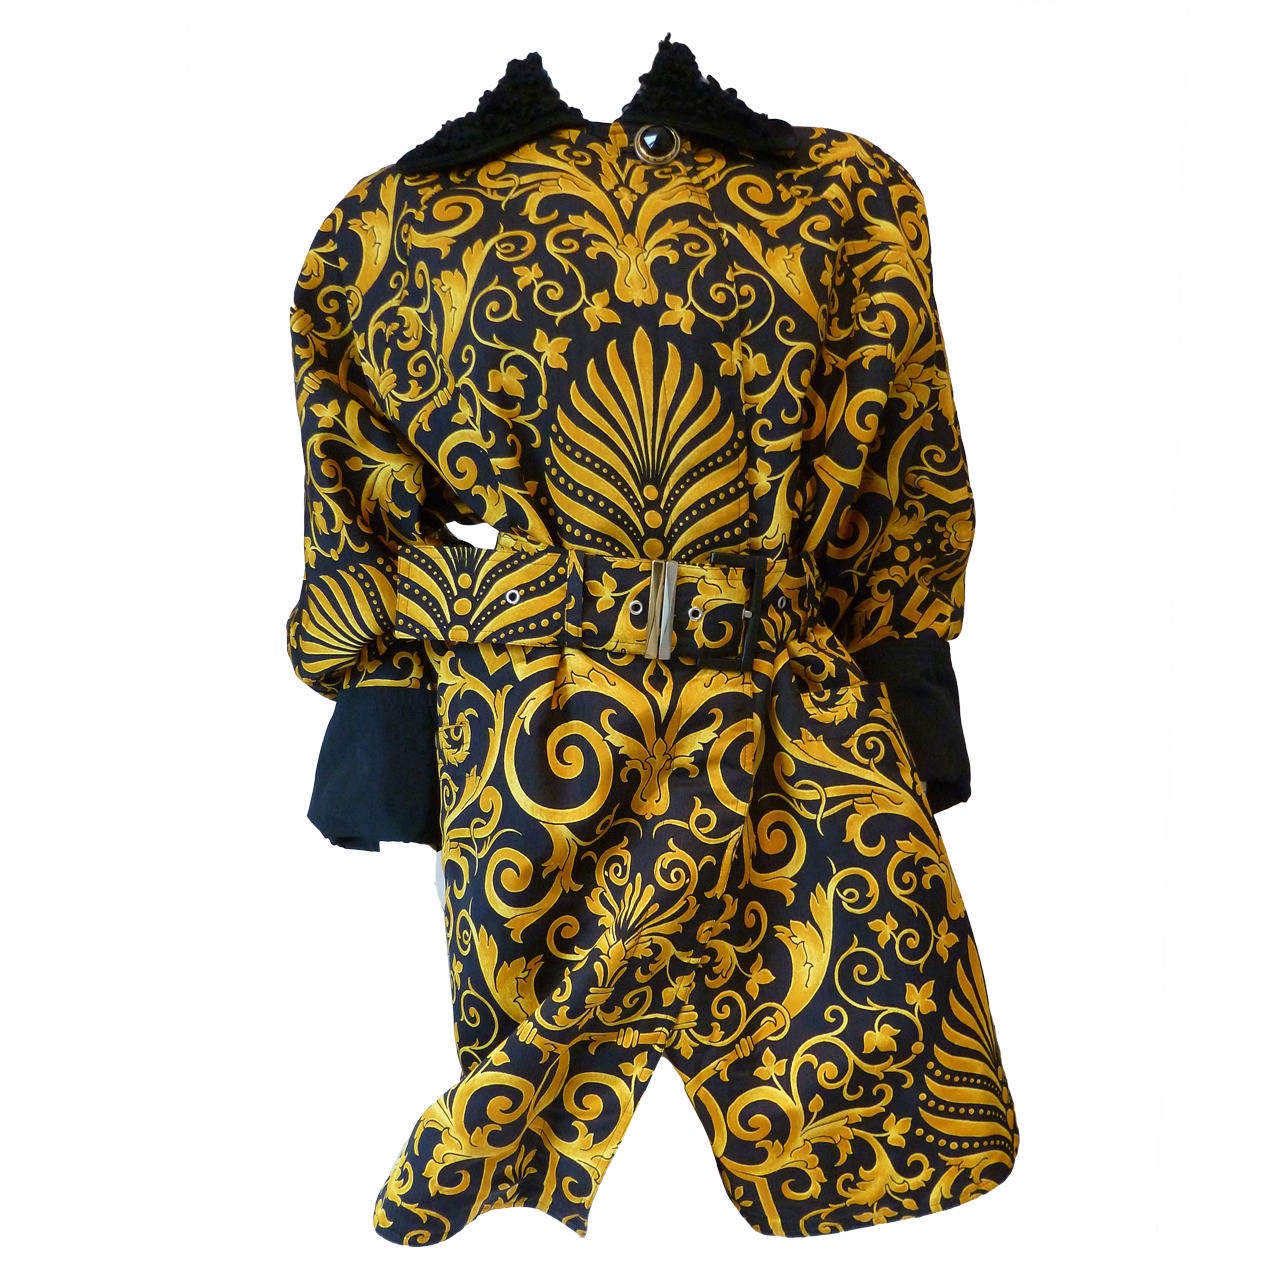 Iconic Gianni Versace Baroque Print Silk Raincoat Fall 1991 For Sale